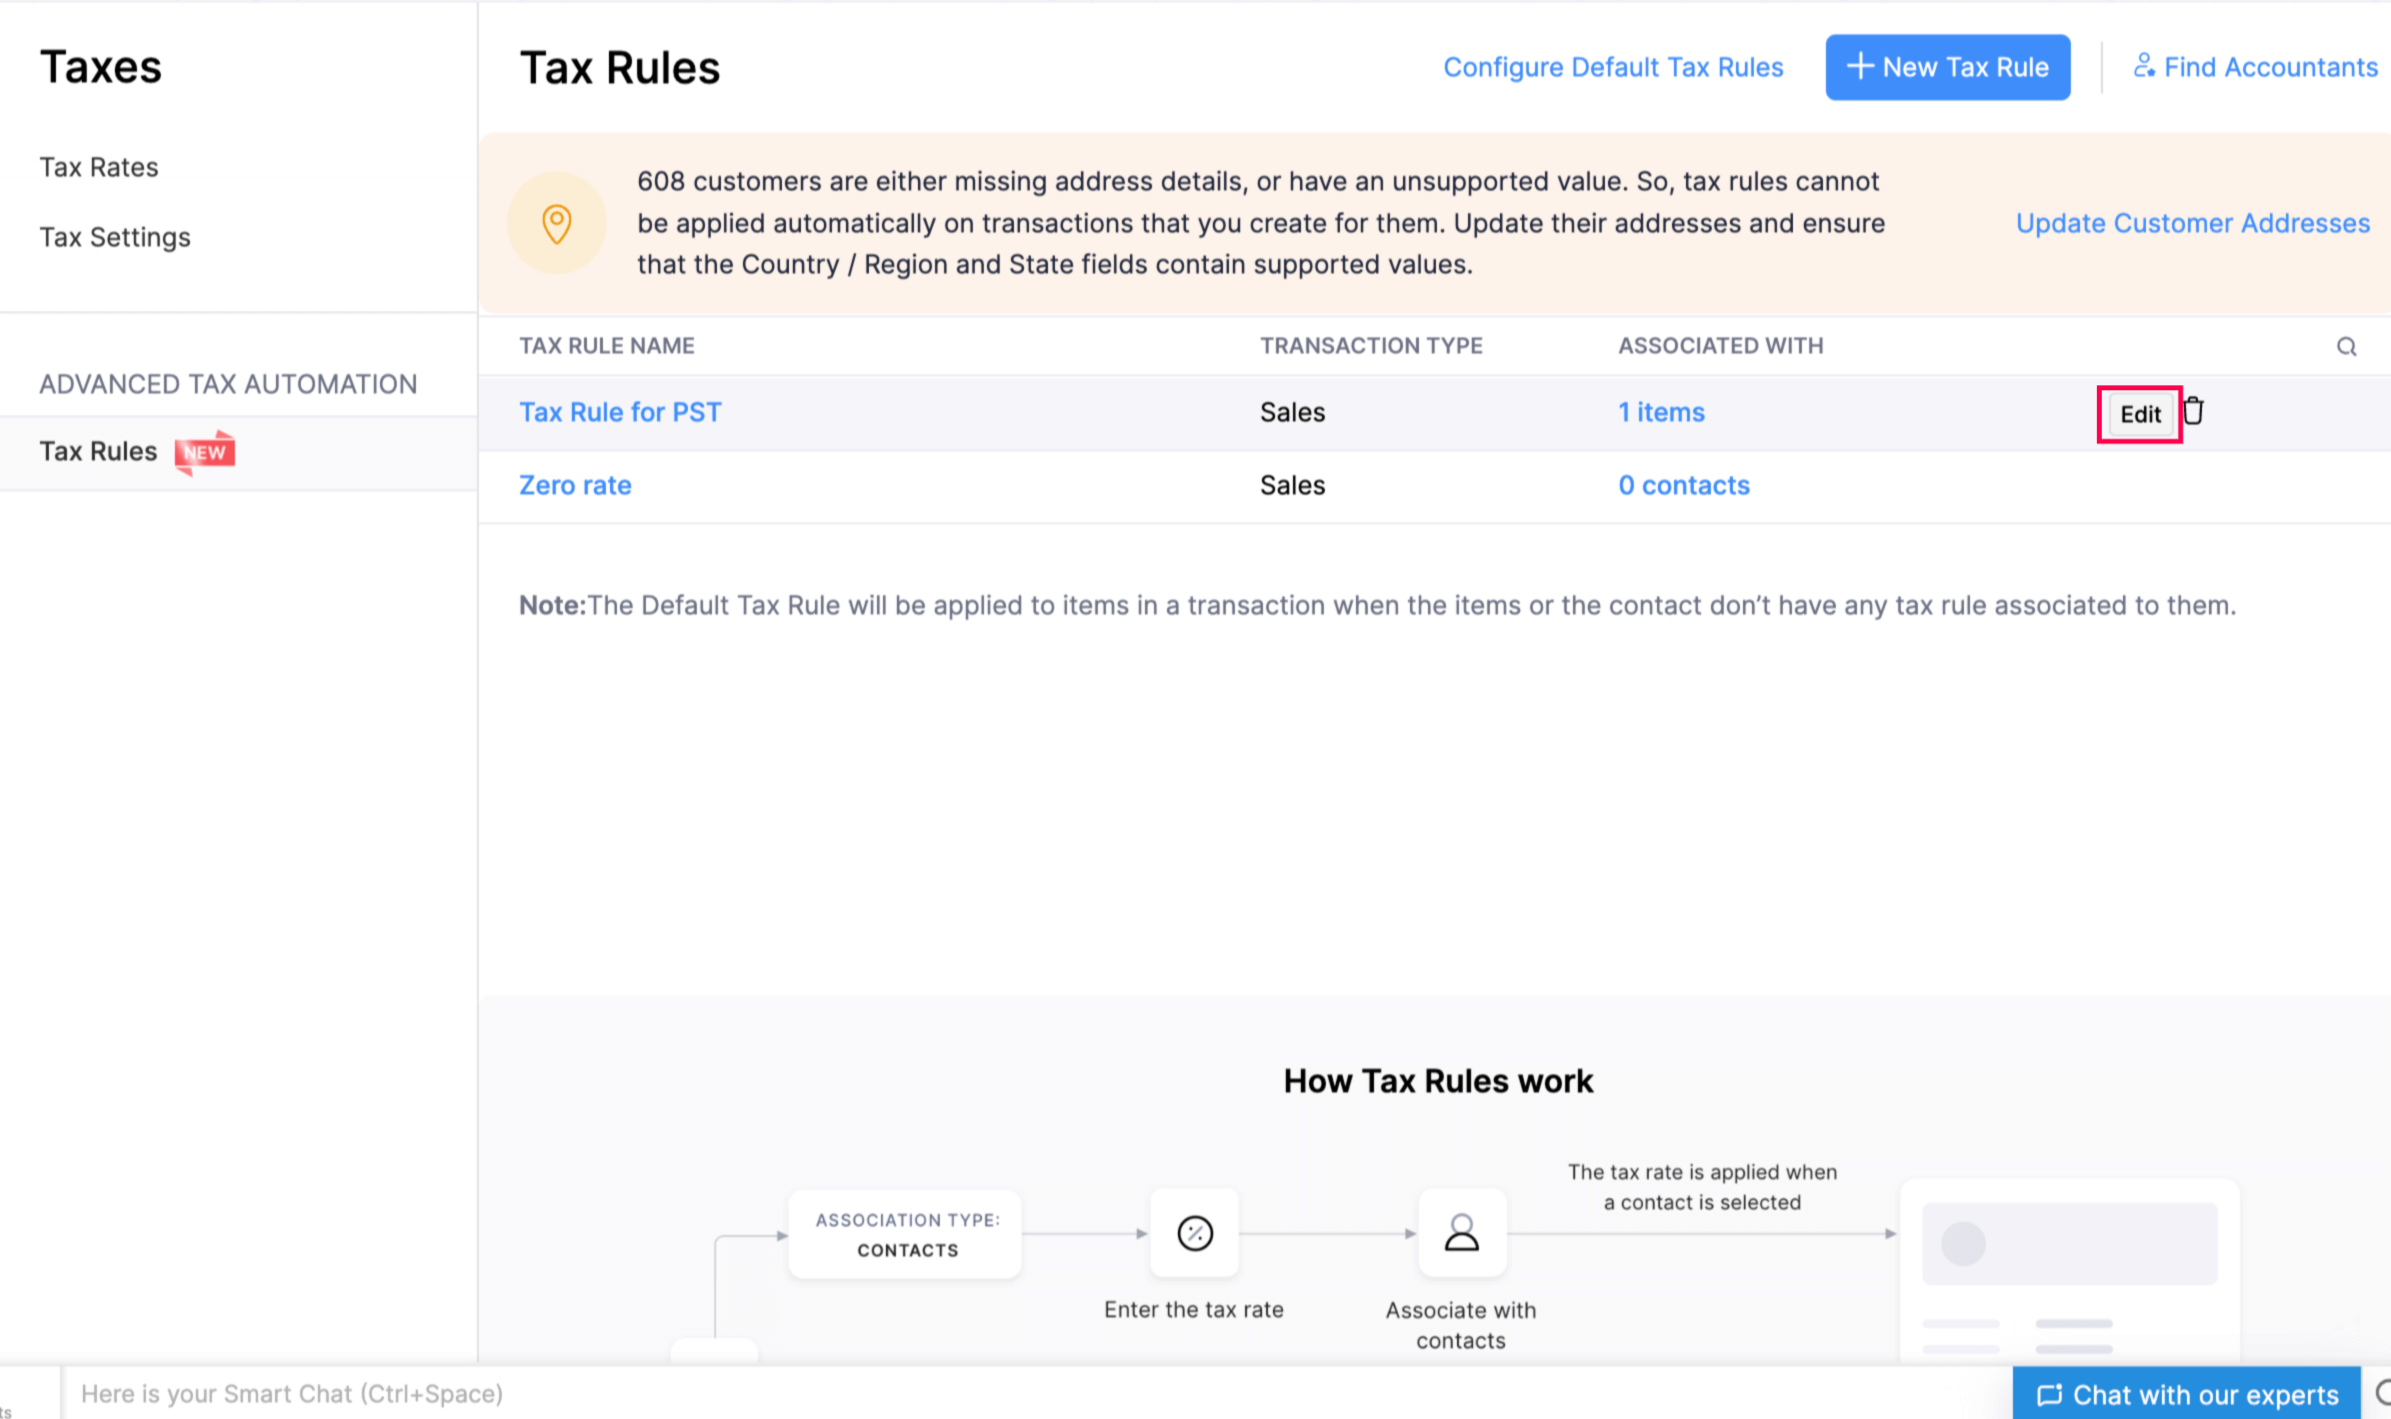 Edit tax rule